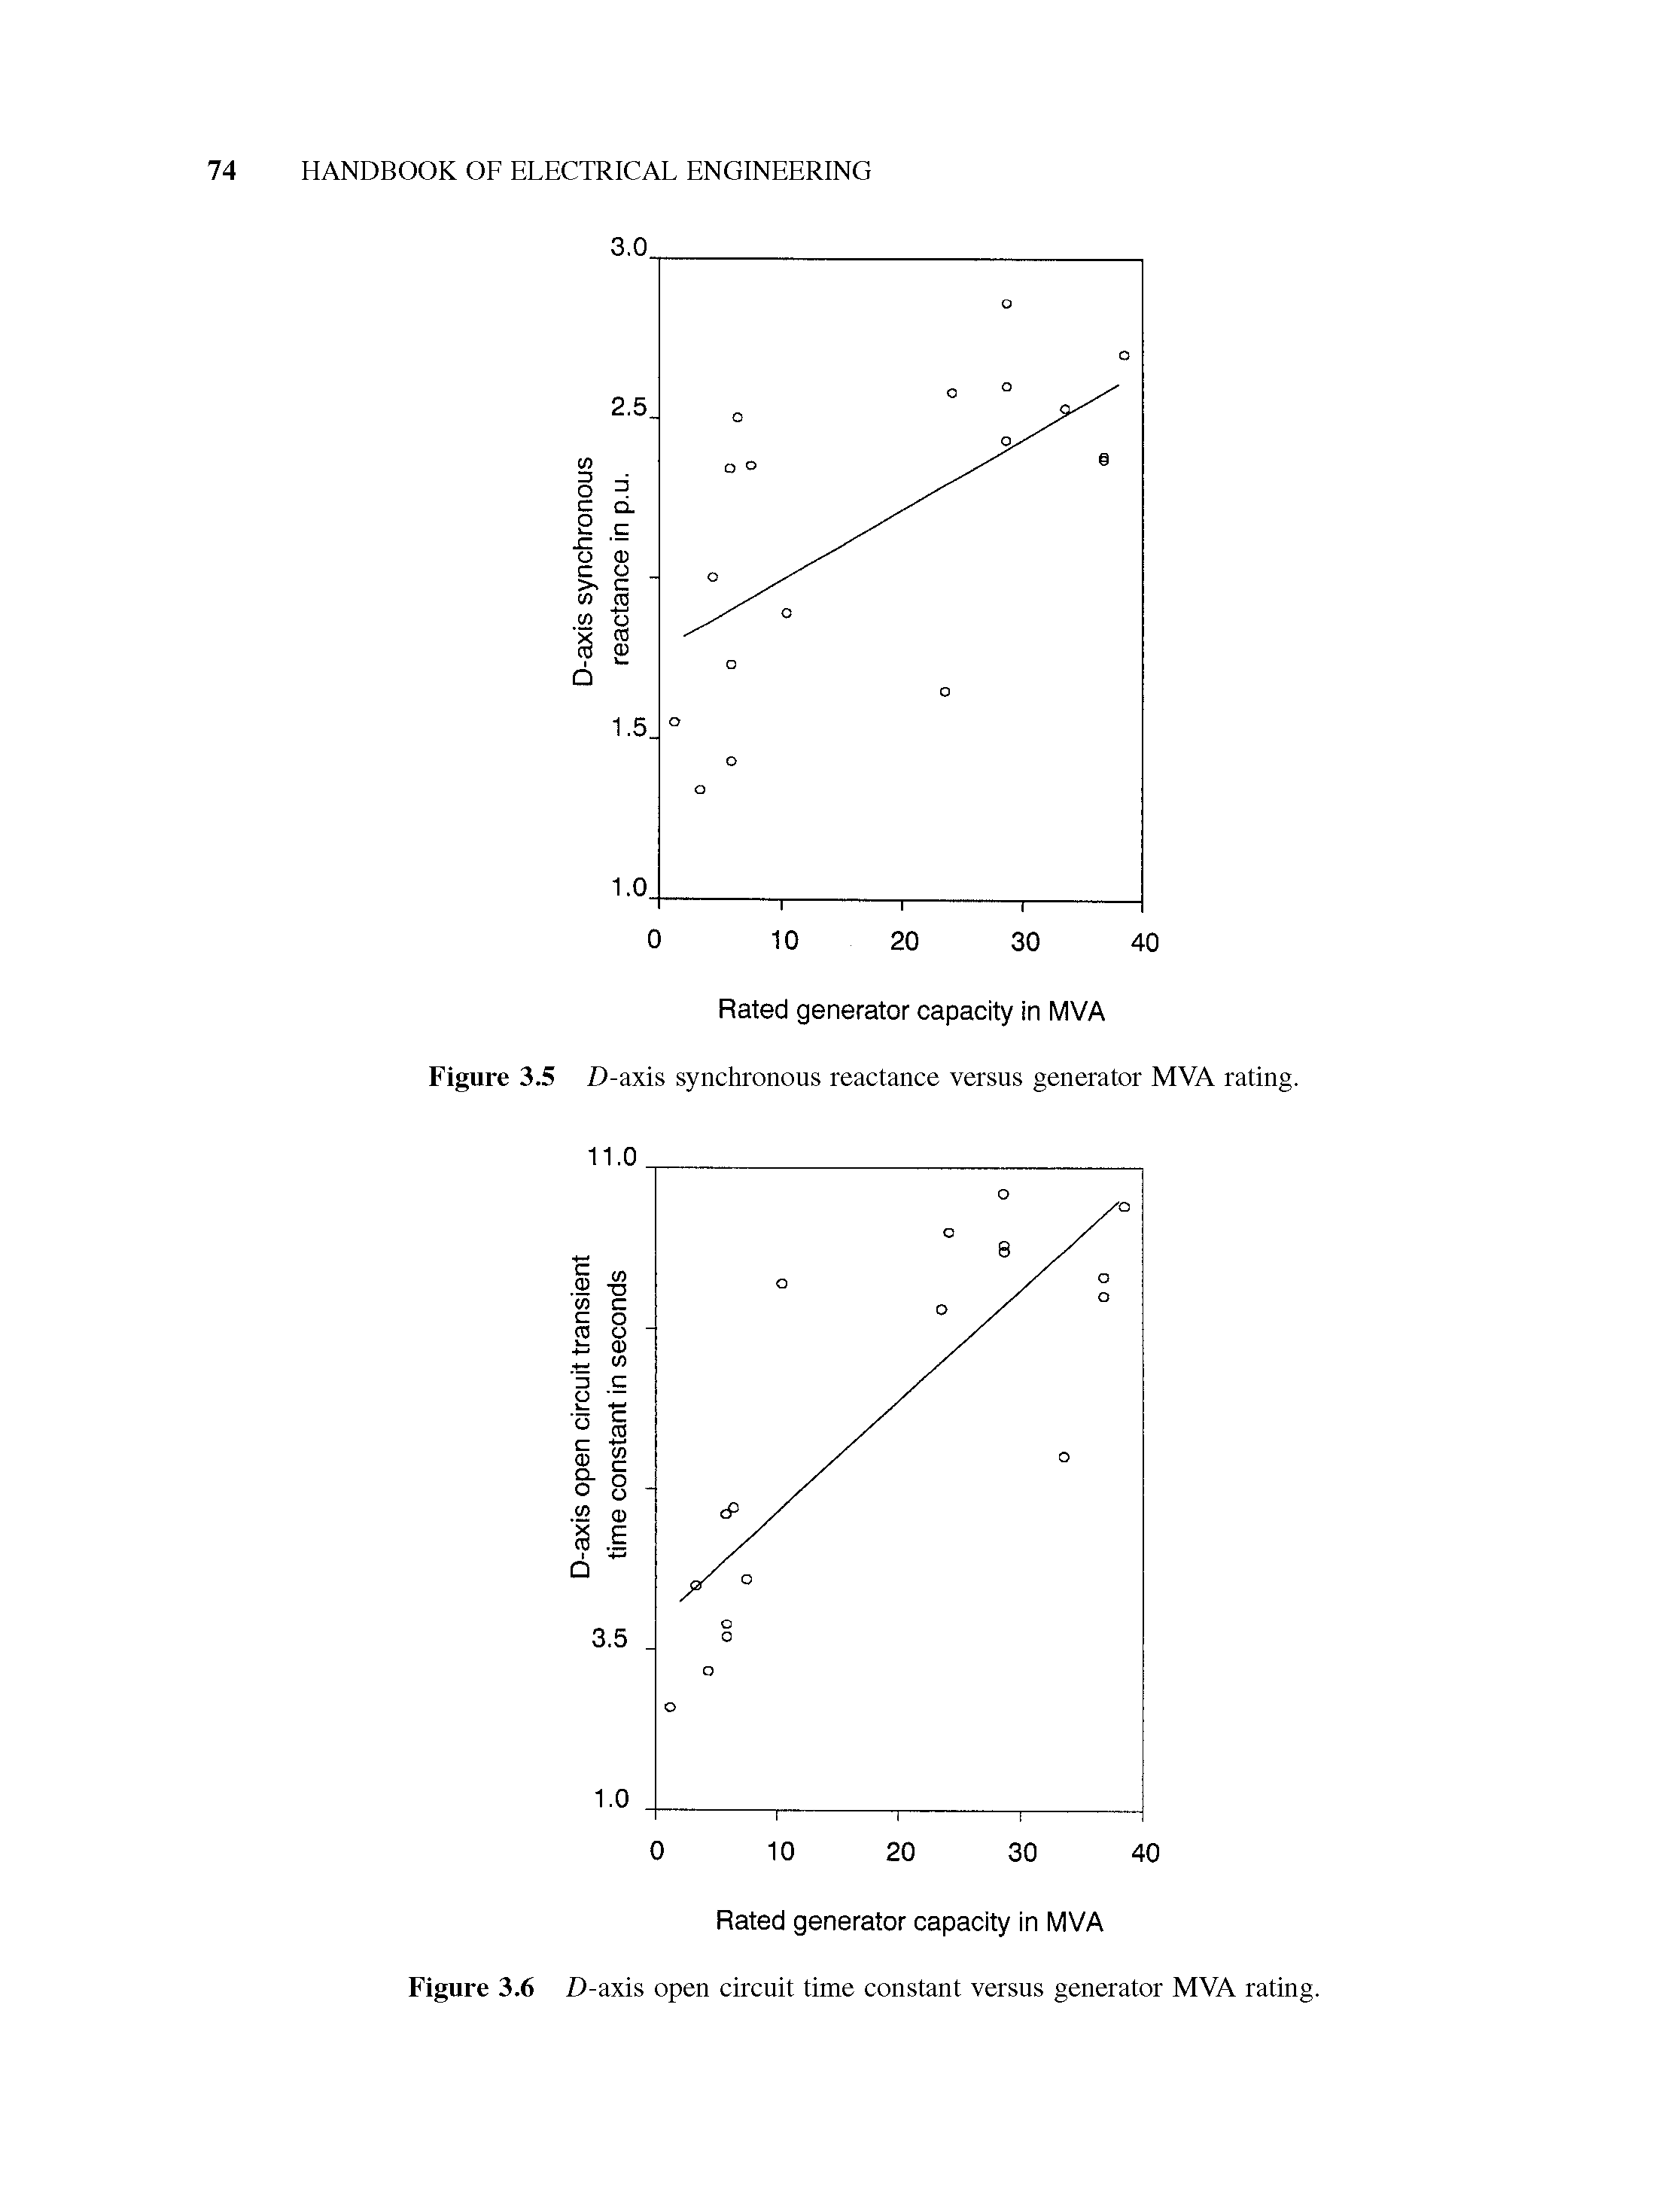 Figure 3.5 D-axis synchronous reactance versus generator MVA rating. 11.0...